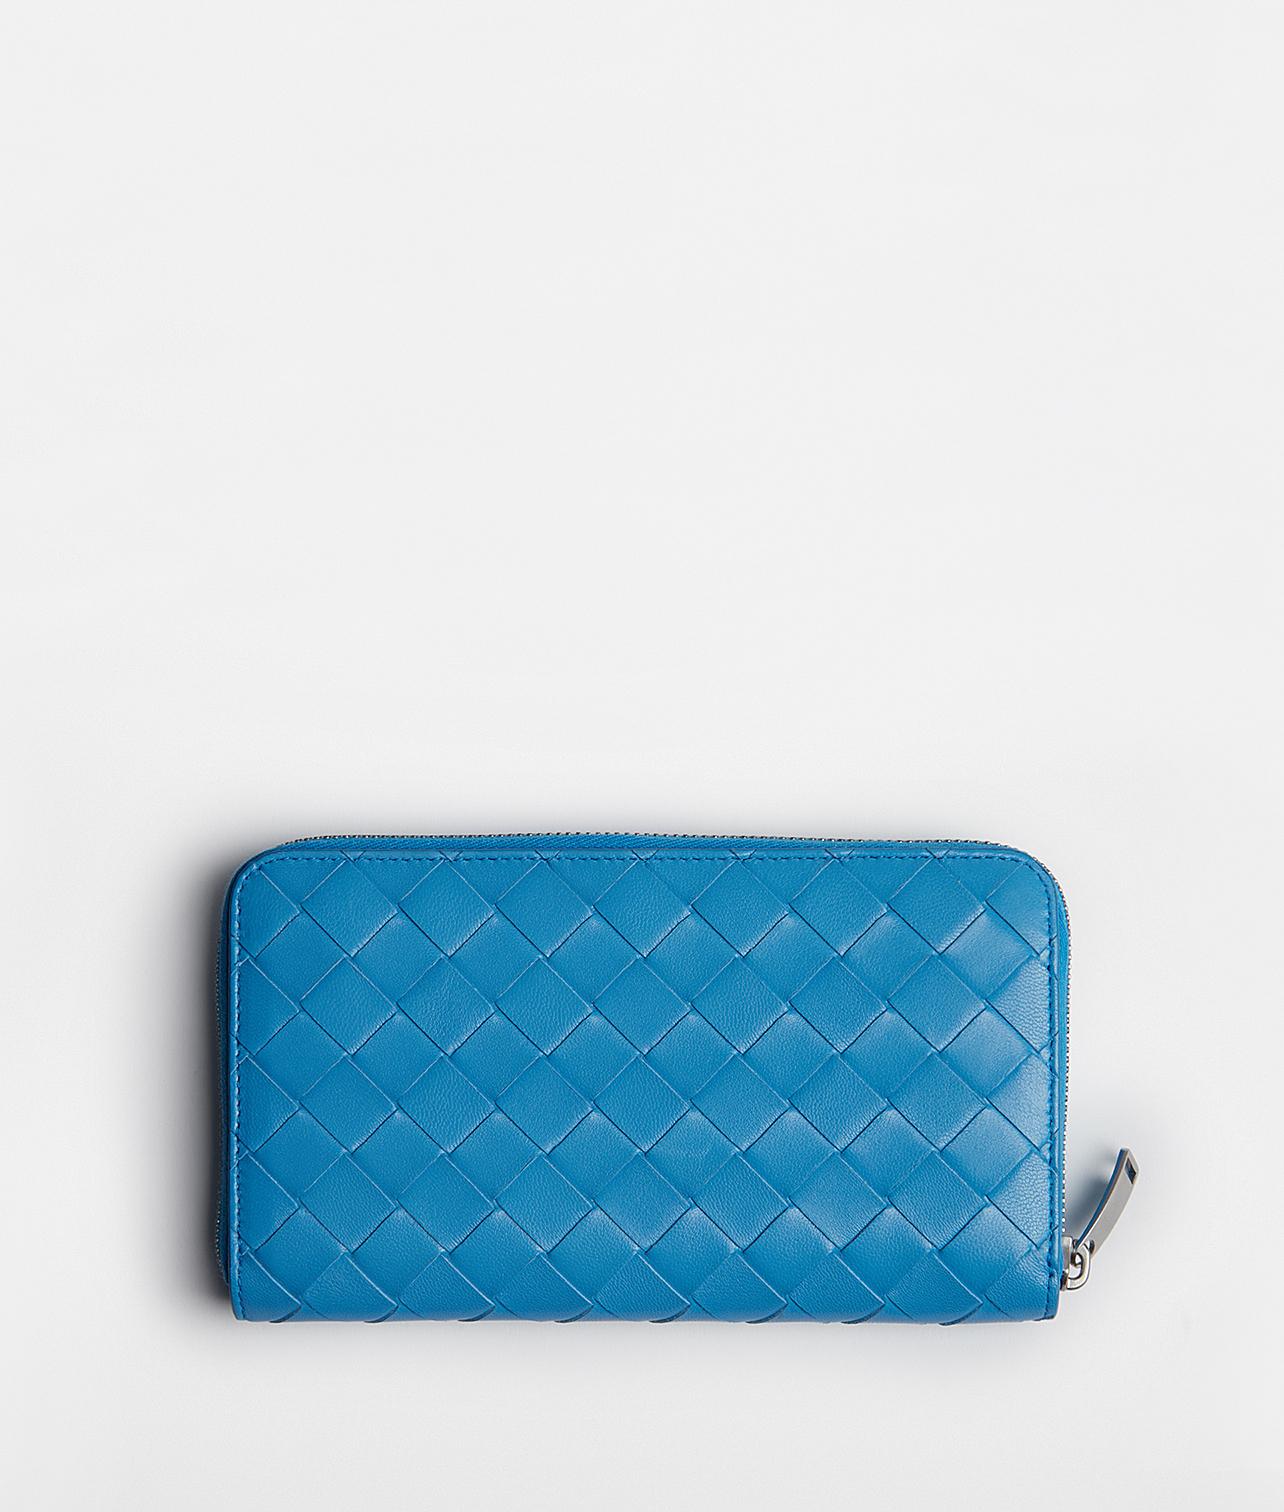 Bottega Veneta Leather Zip-around Wallet in Blue - Lyst